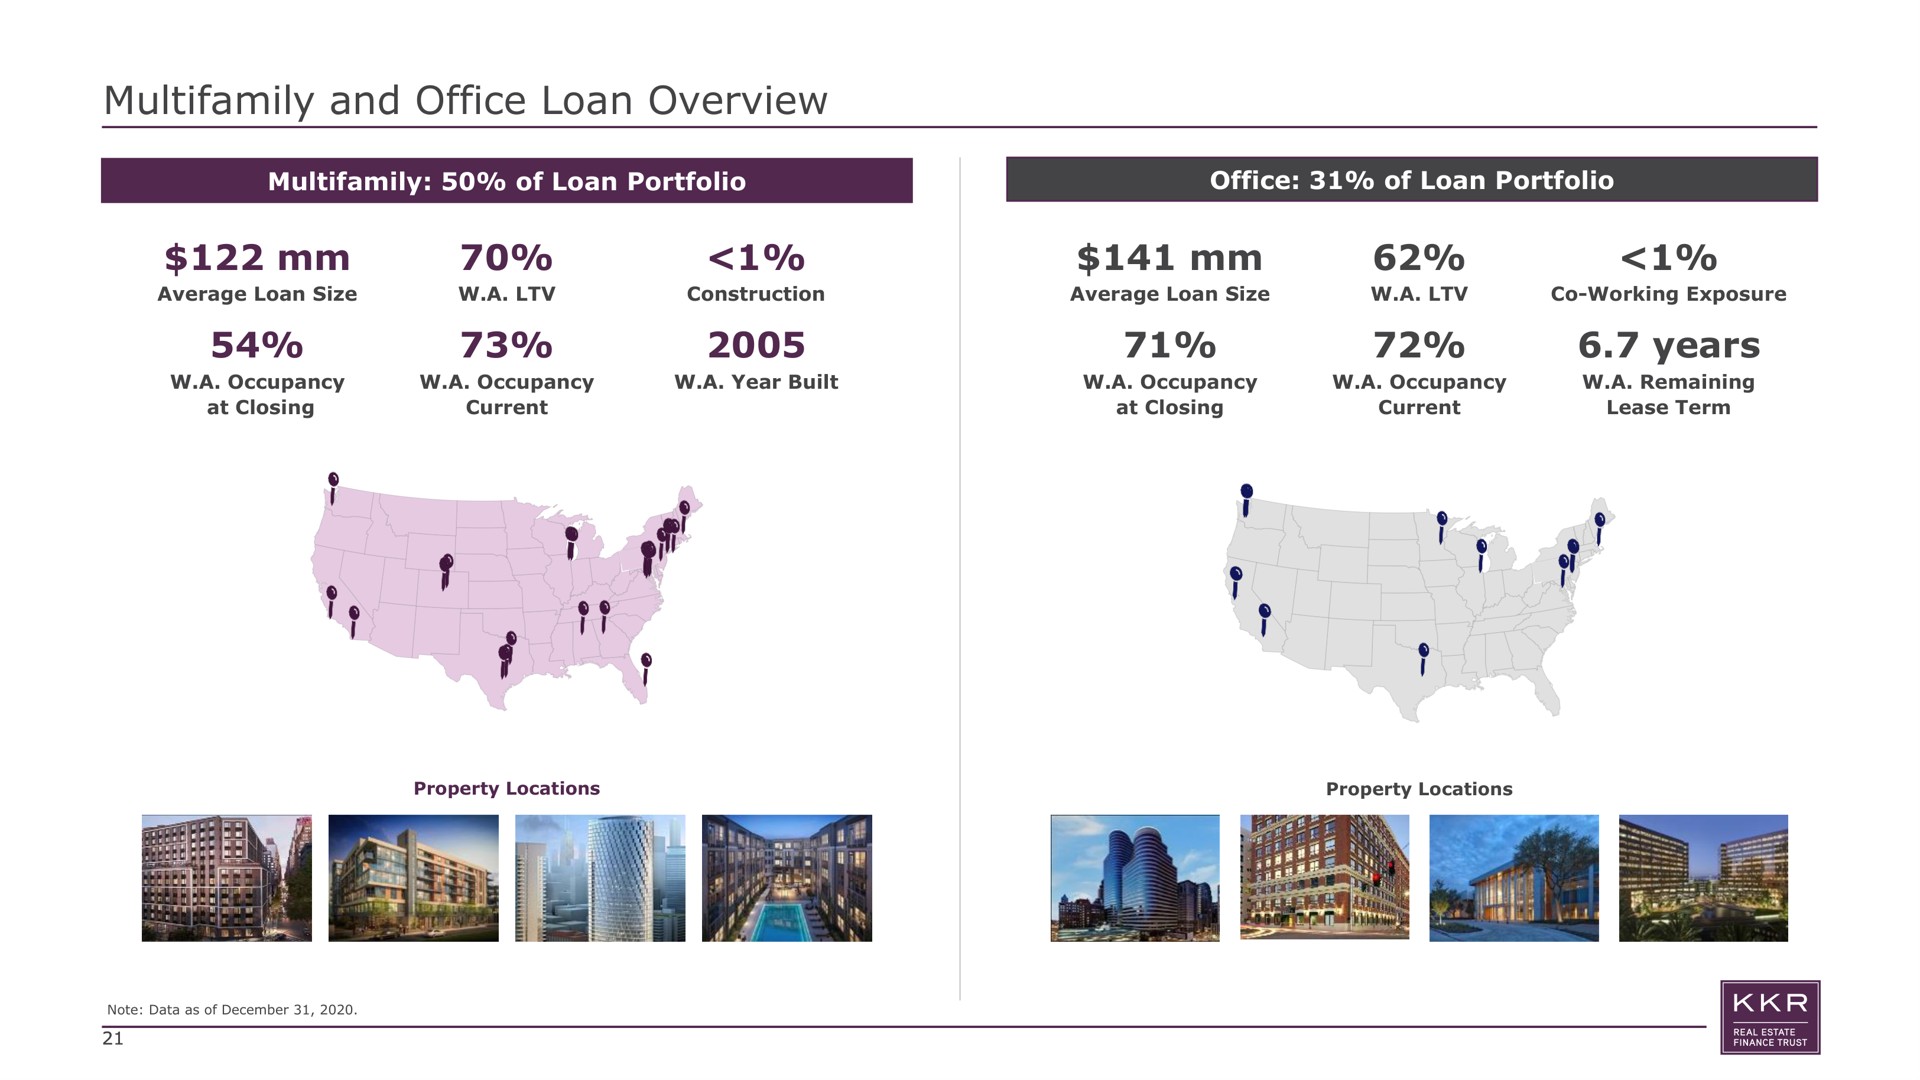 and office loan overview of loan portfolio office of loan portfolio years | KKR Real Estate Finance Trust